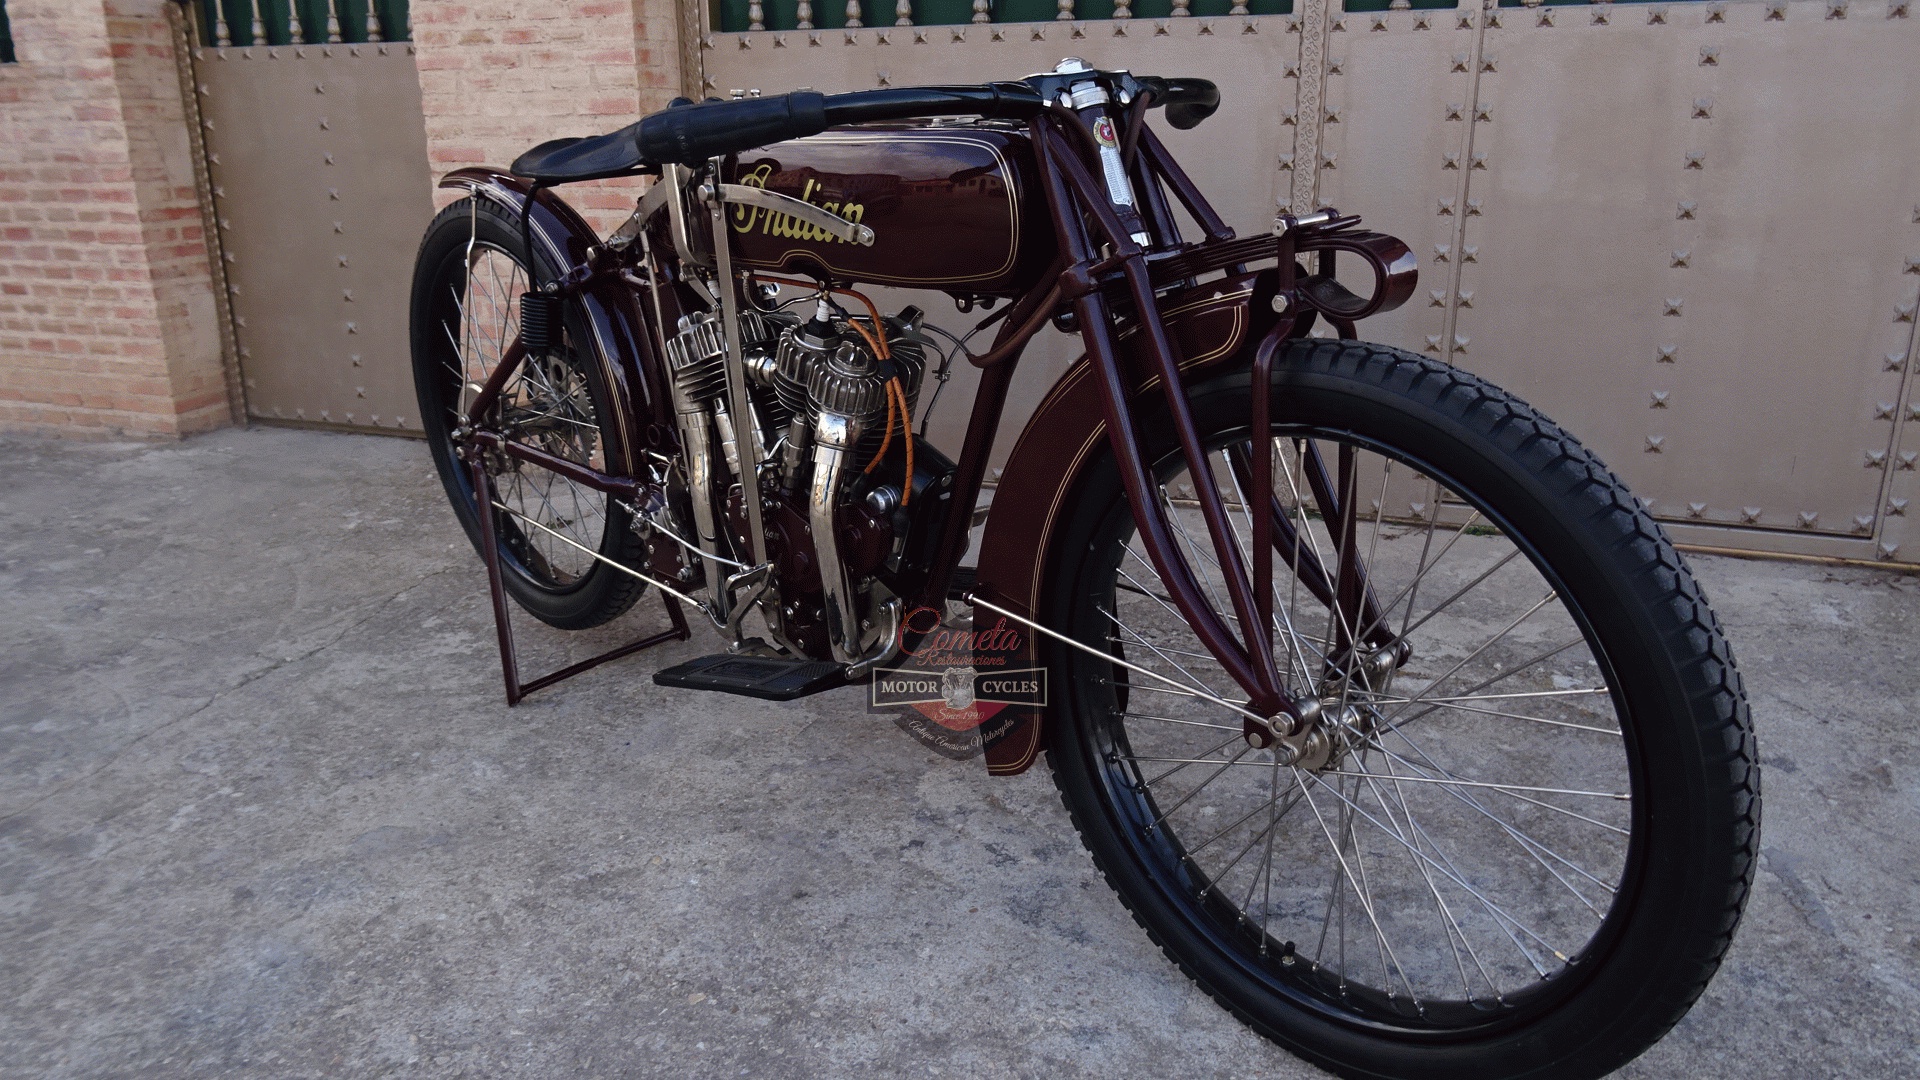 INDIAN POWERPLUS STANDARD RACER 1200cc BIG VALVE AÑO 1920 !